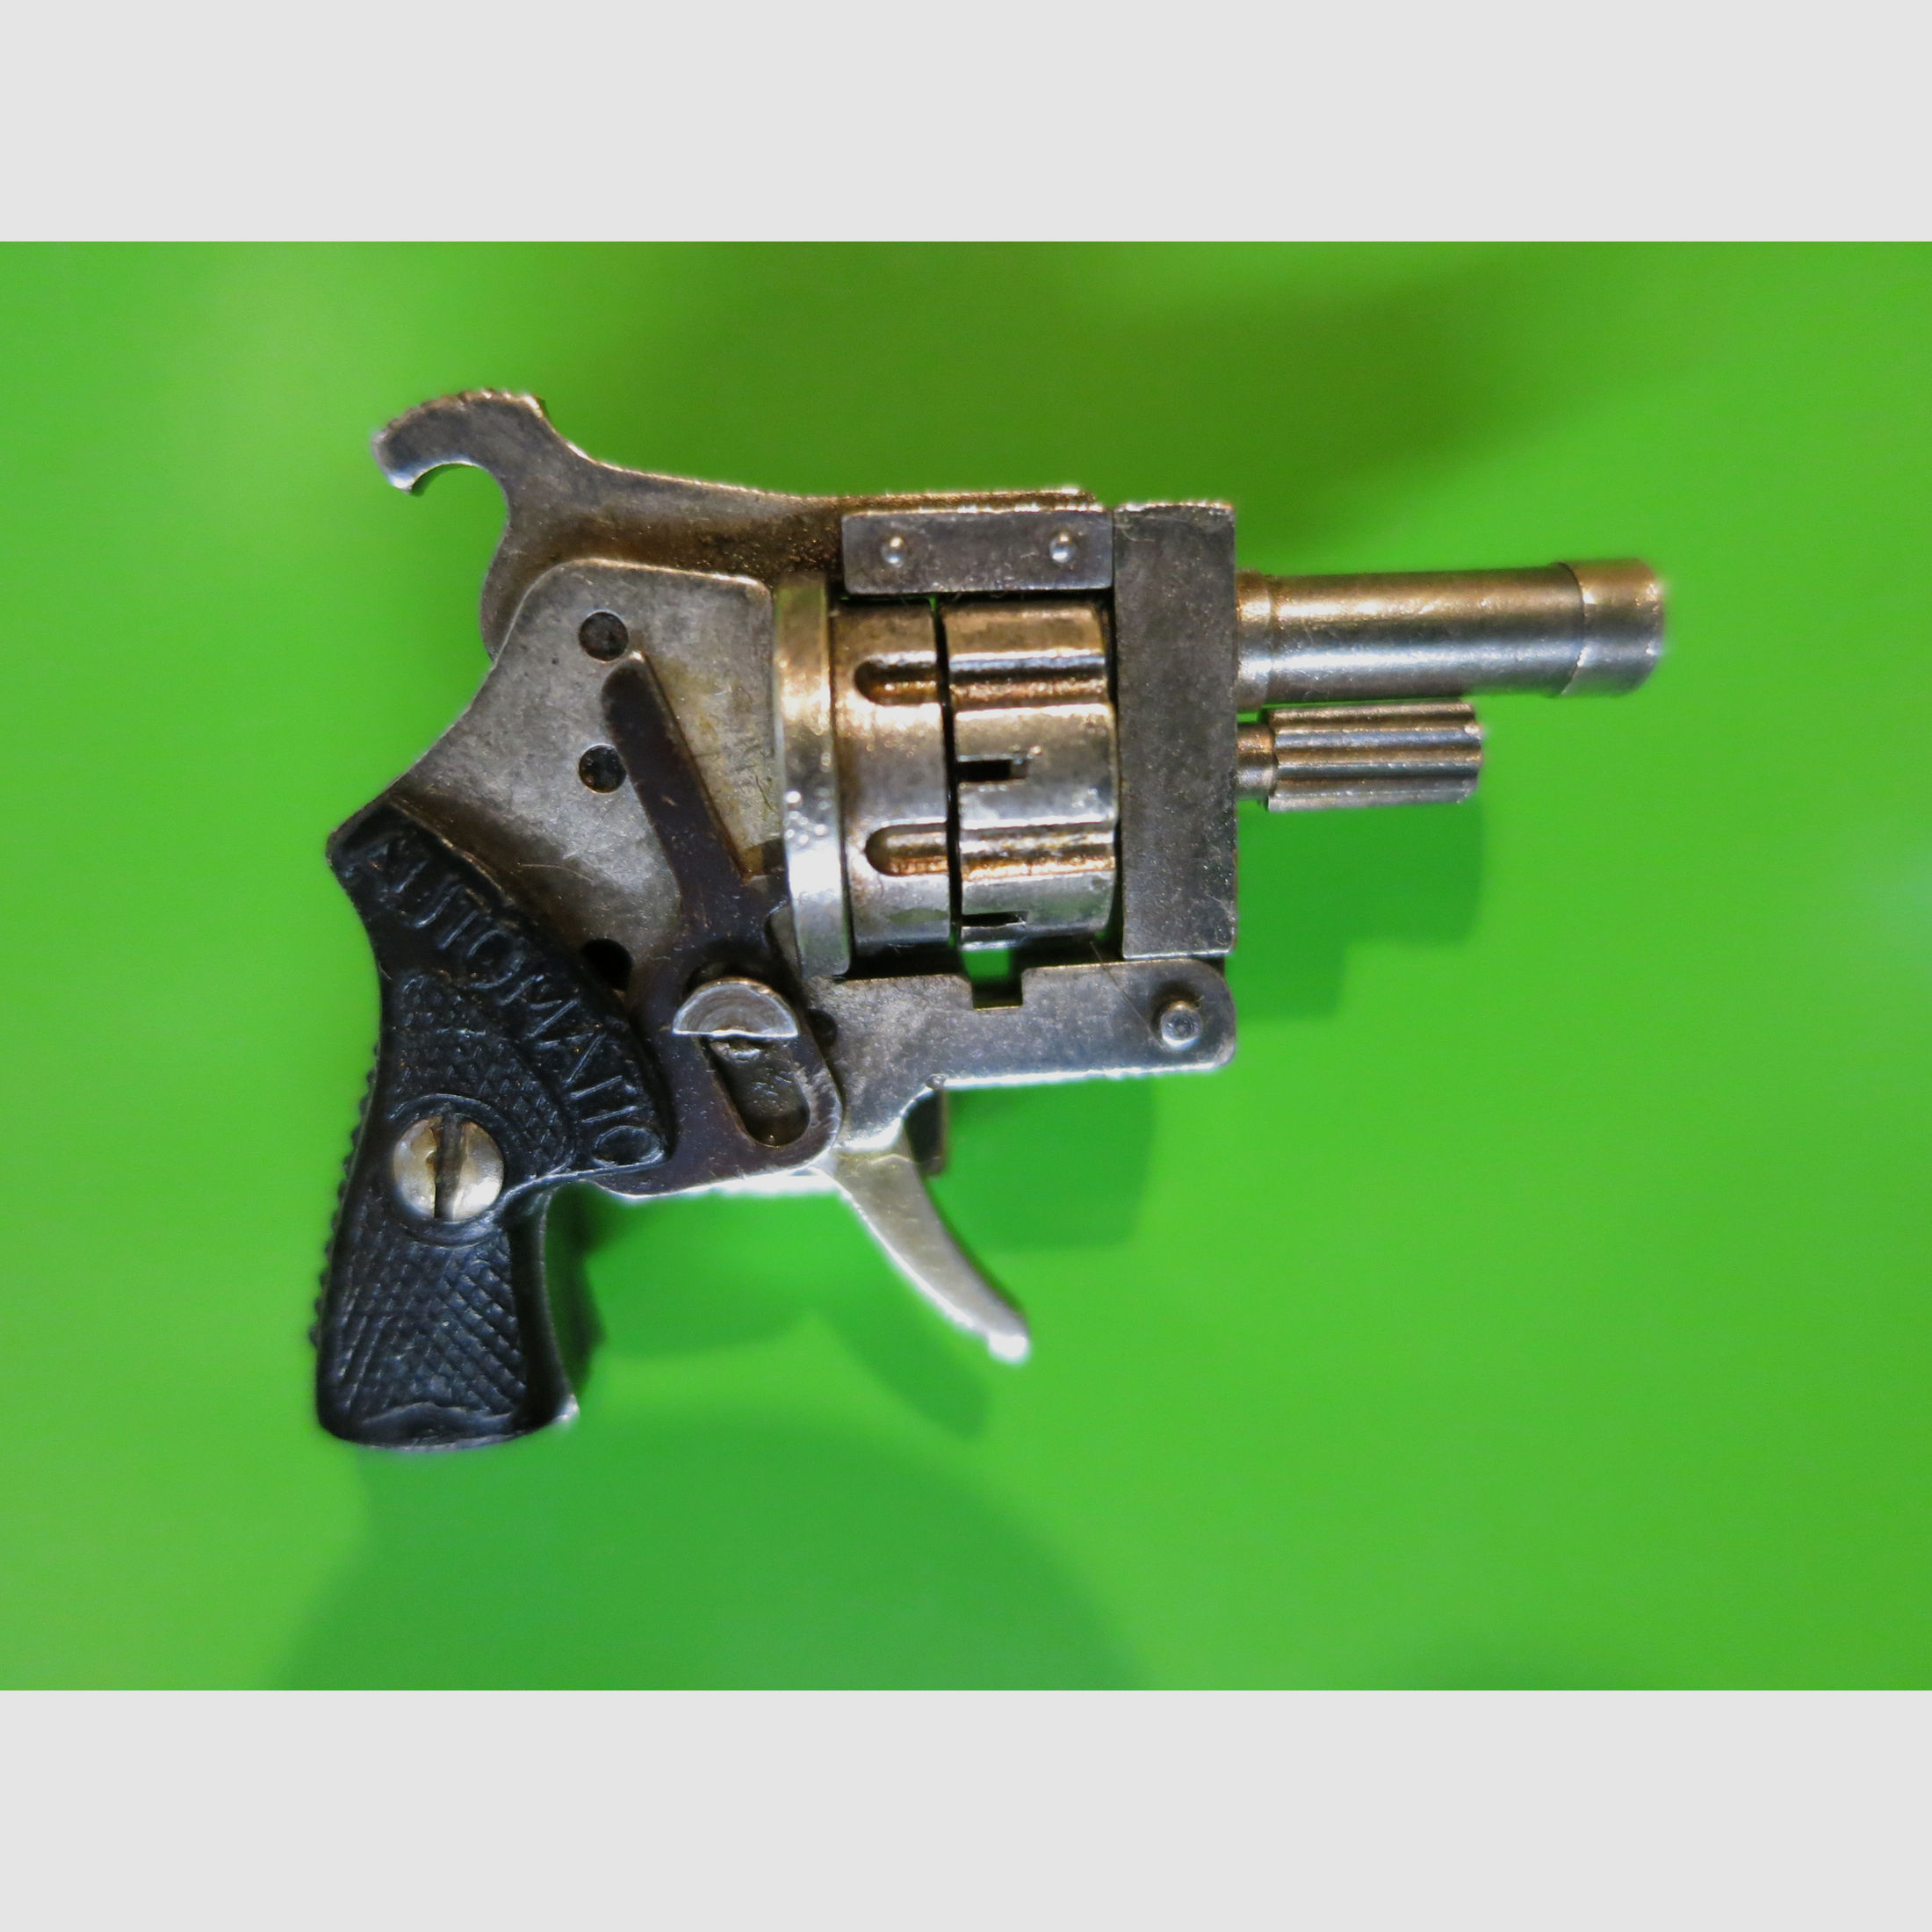 Xythos Automatic Revolver, Kal. 2 mm Berloque, absolute Rarität - erste Serie, kleinster Revolver?       #100